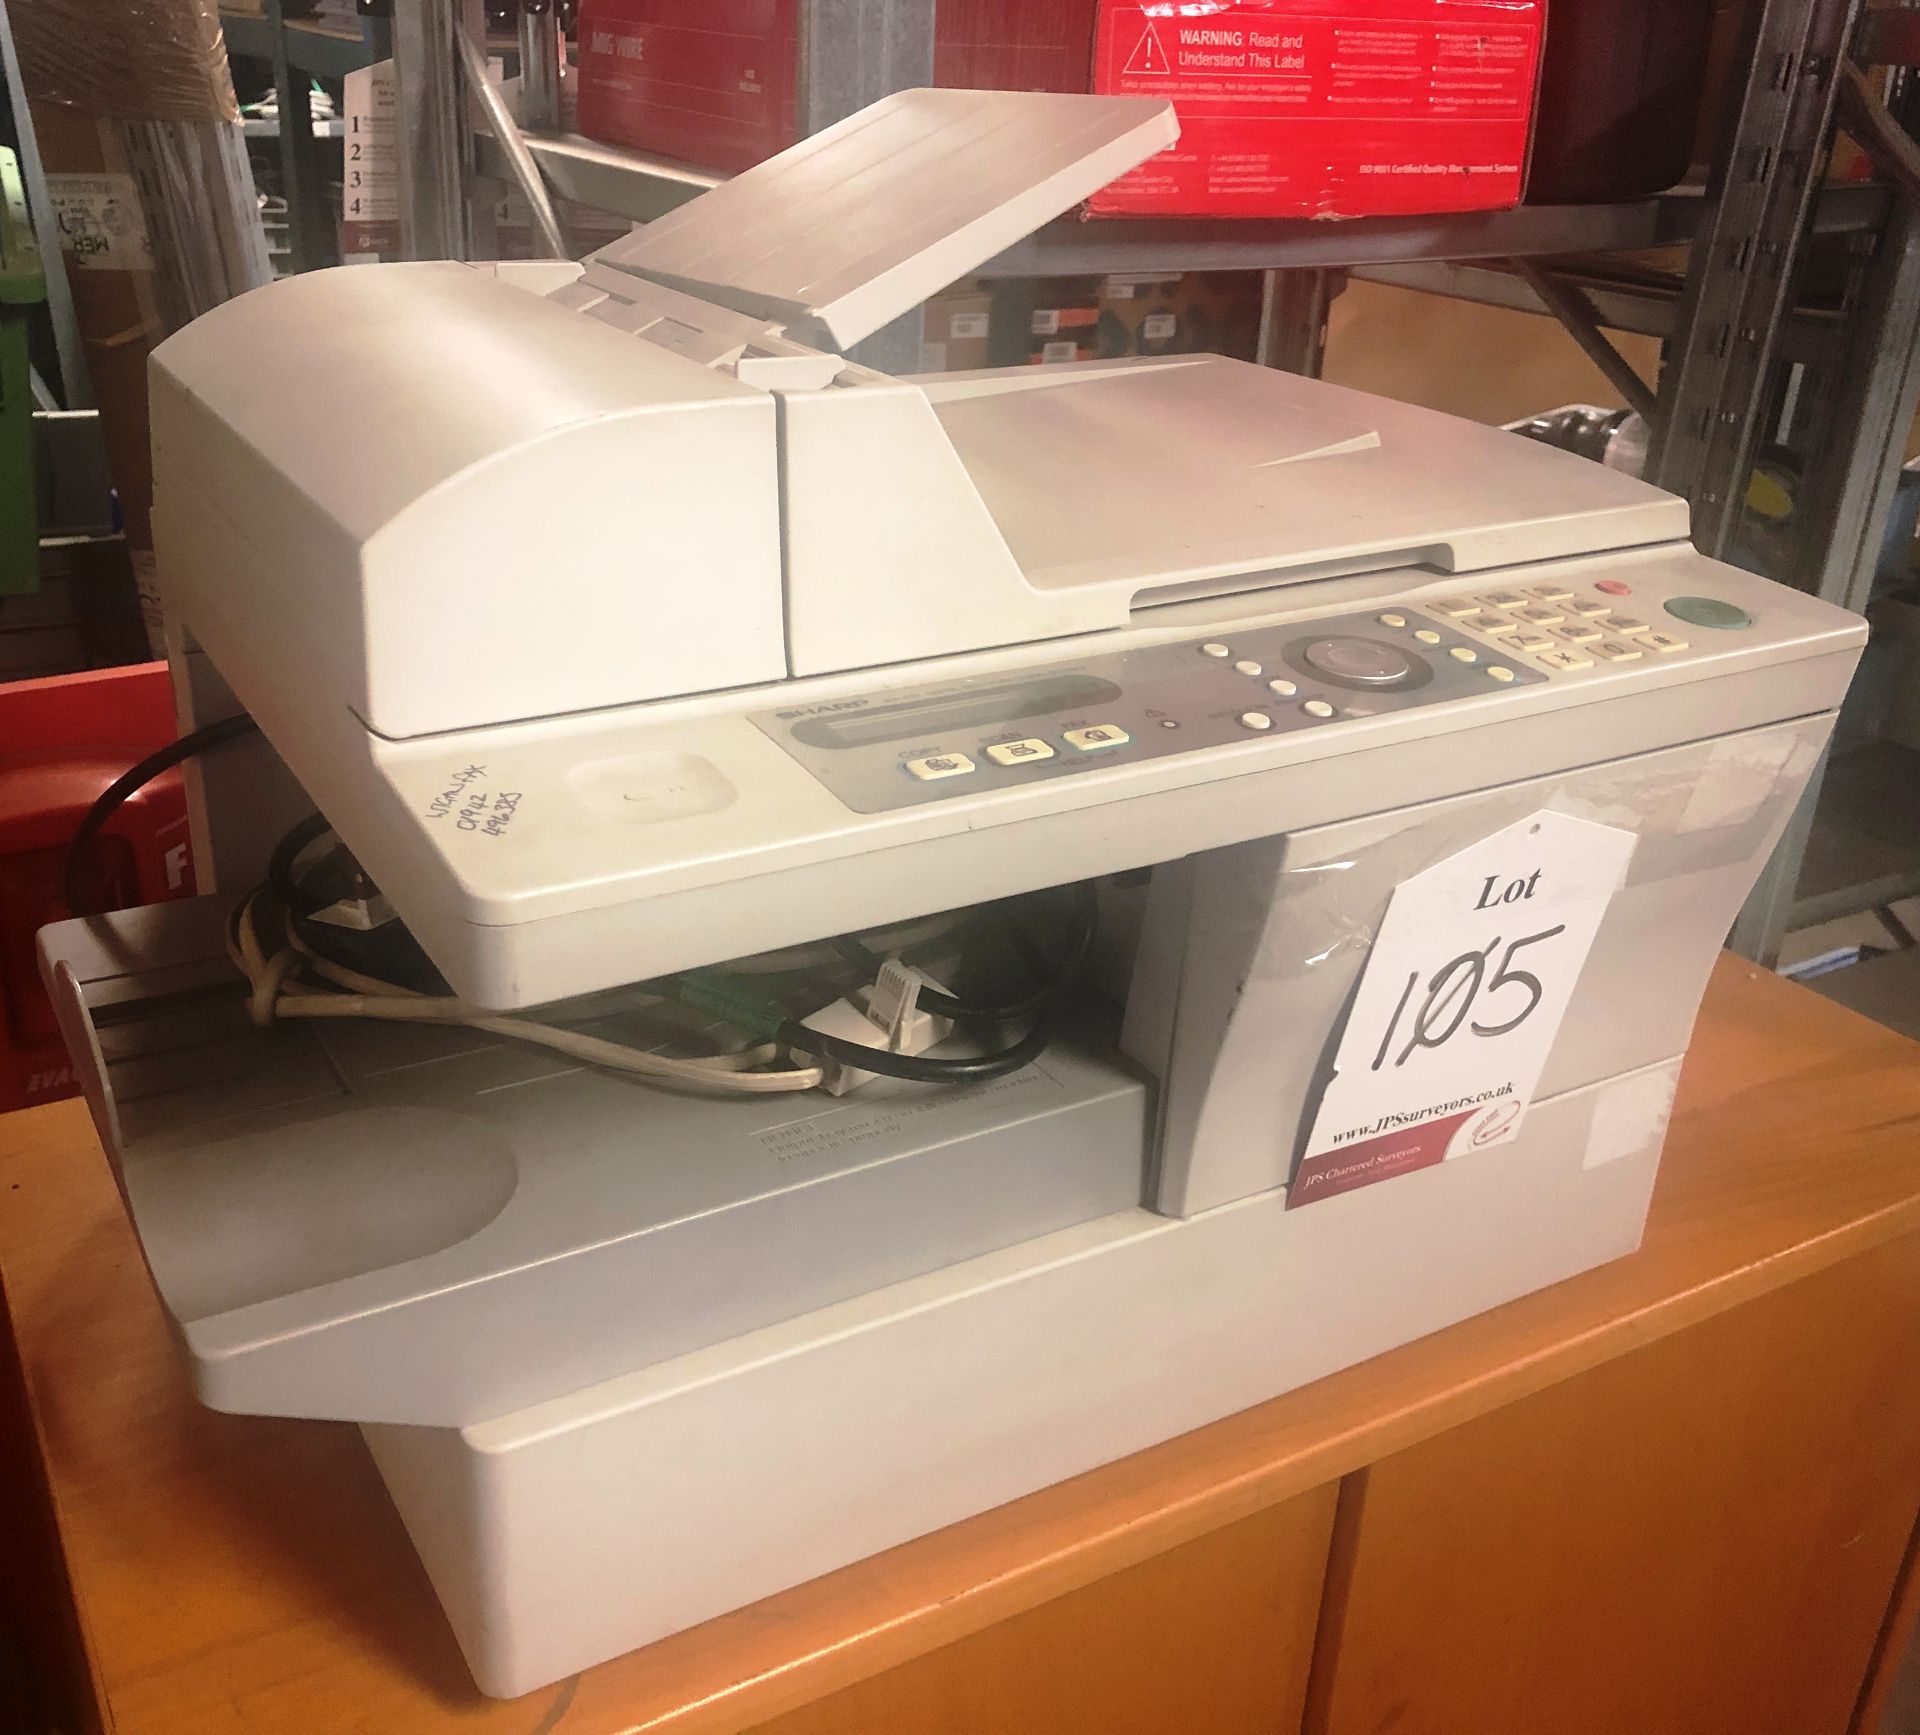 Sharp AM-400 Laserjet All-in-One Printer - Image 2 of 5